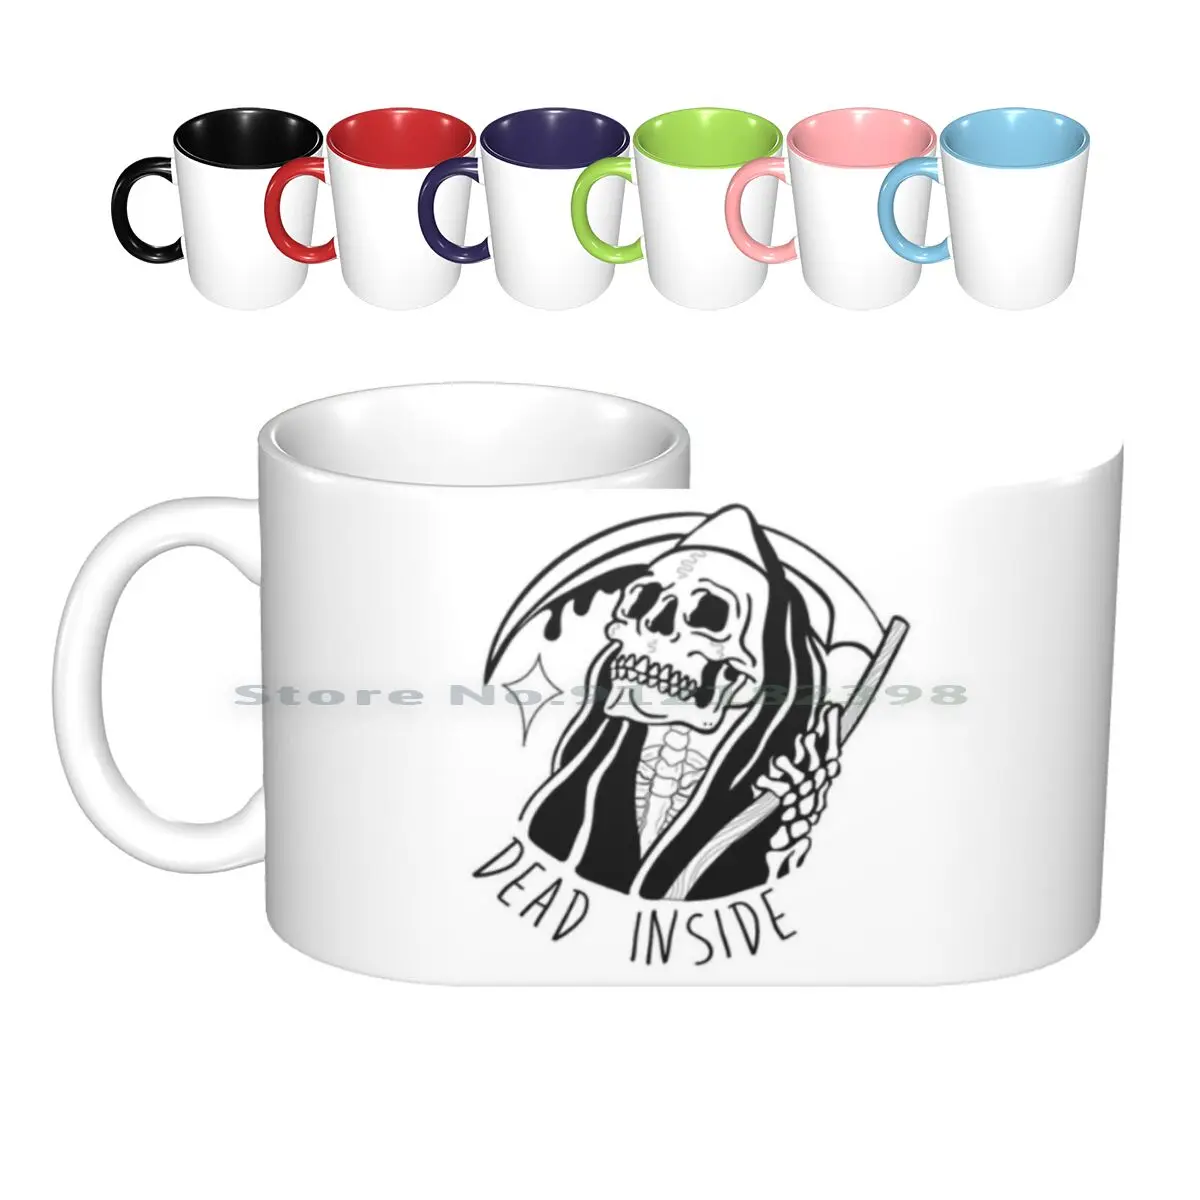 

Keeping It Grim Ceramic Mugs Coffee Cups Milk Tea Mug Death Grim Grim Reaper Dark Dead Dead Inside Inside Black And White Black